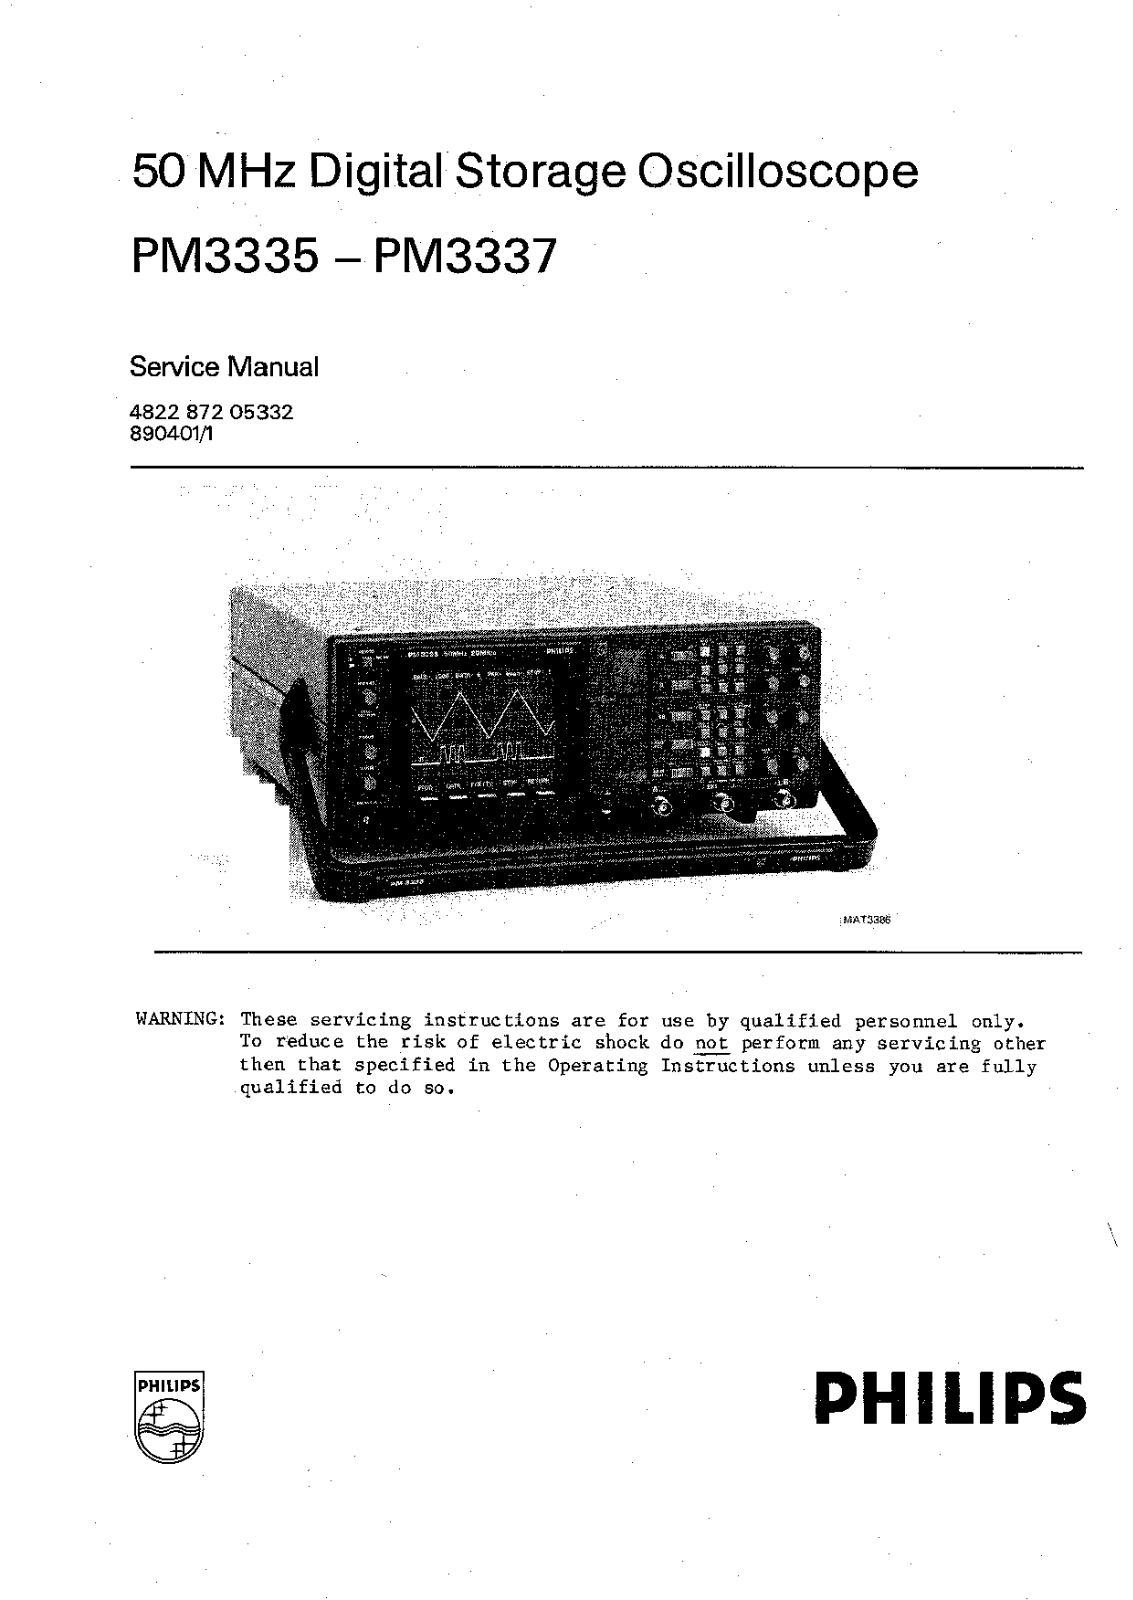 Philips PM-3337, PM-3335 Service Manual